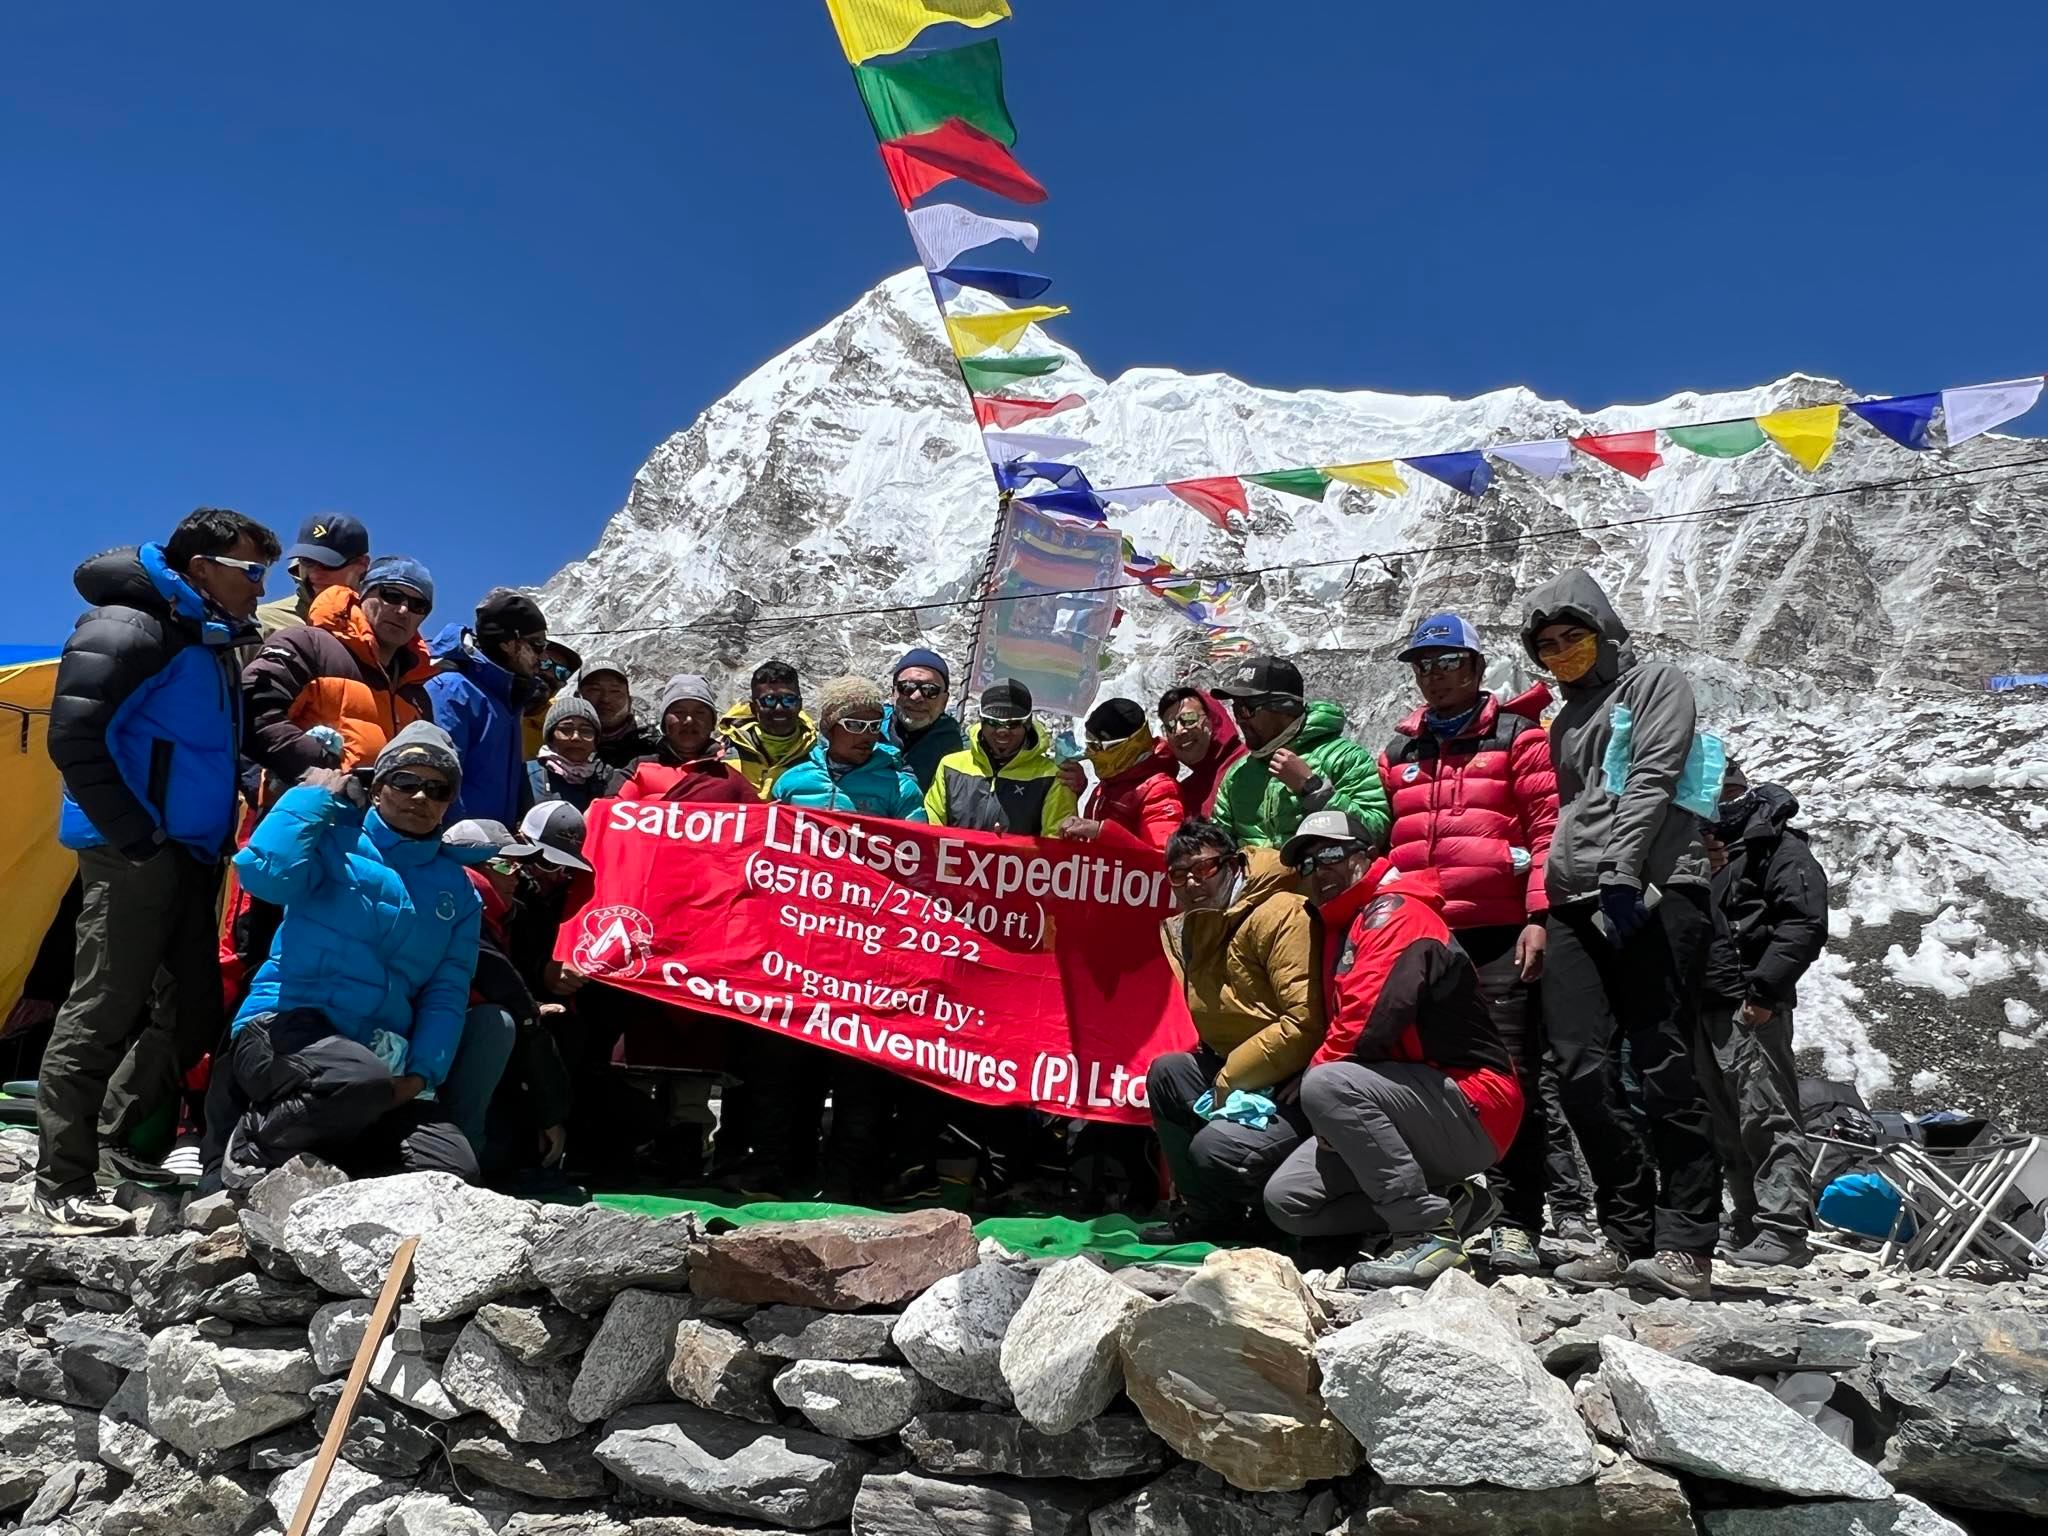 Lhotse Expedition Group 2022